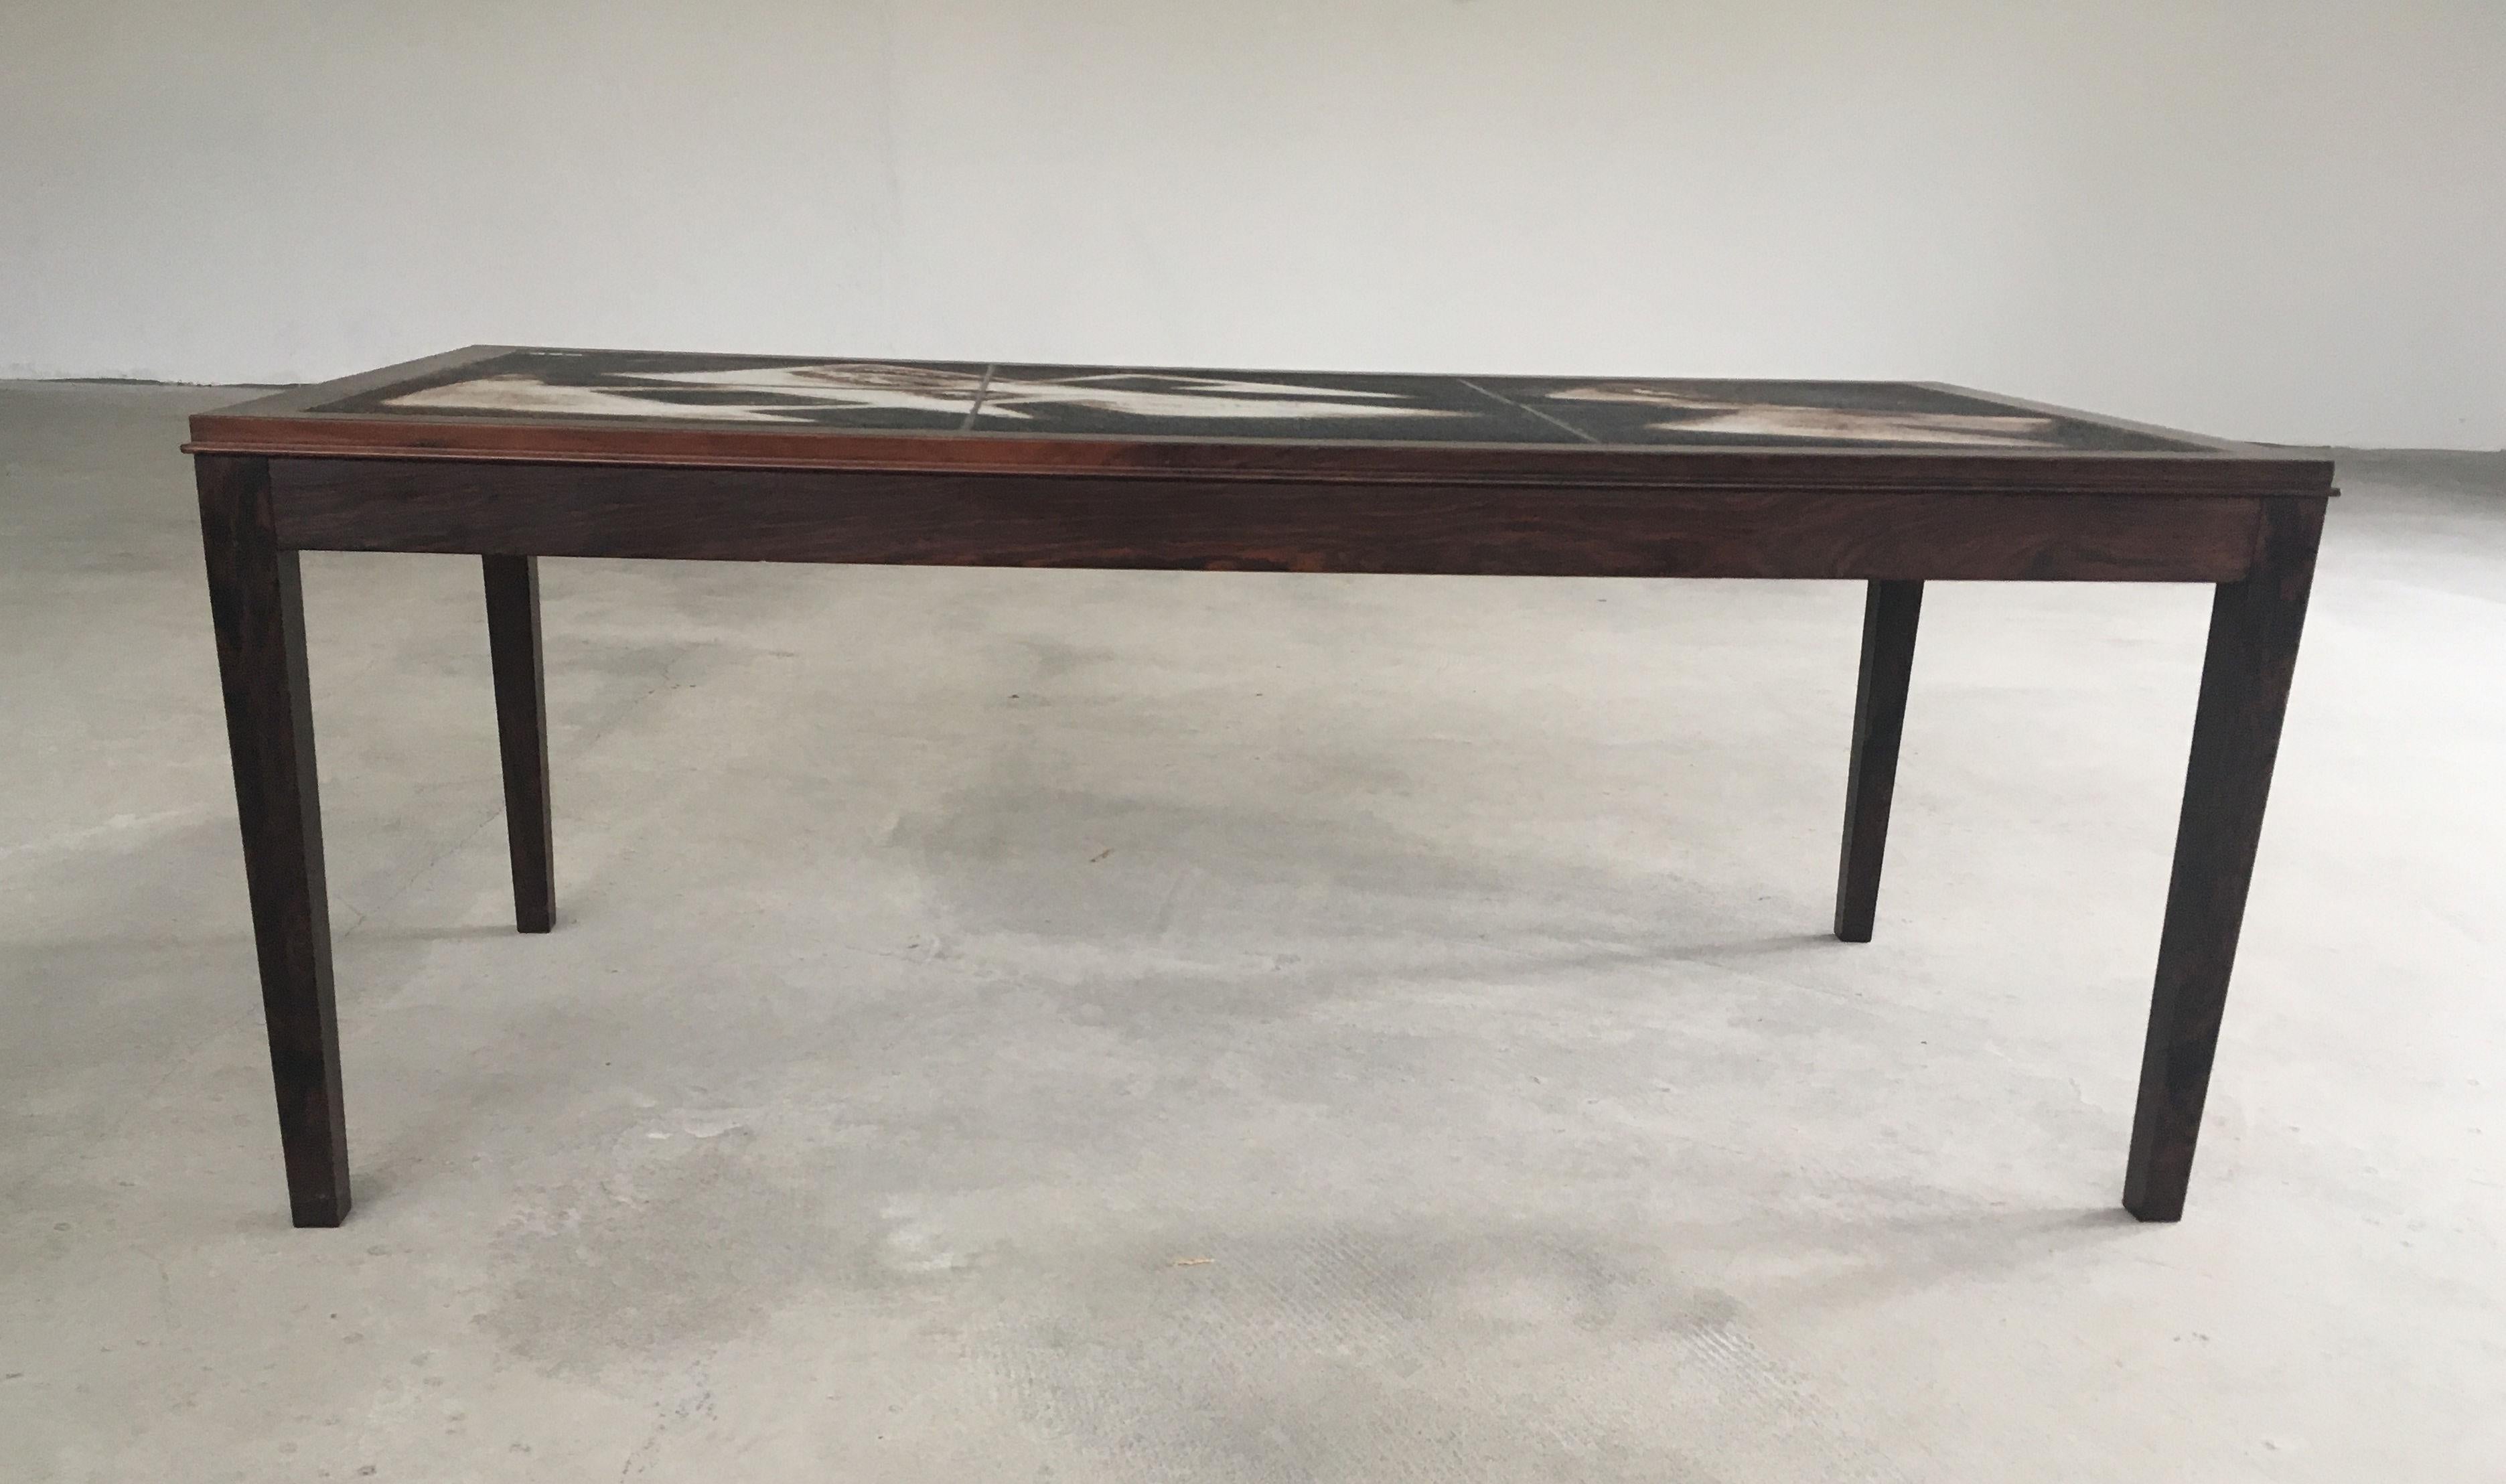 Scandinavian Modern 1960s Ole Bjorn Krüger Fully Restored Tile Topped Coffee Table in Rosewood For Sale